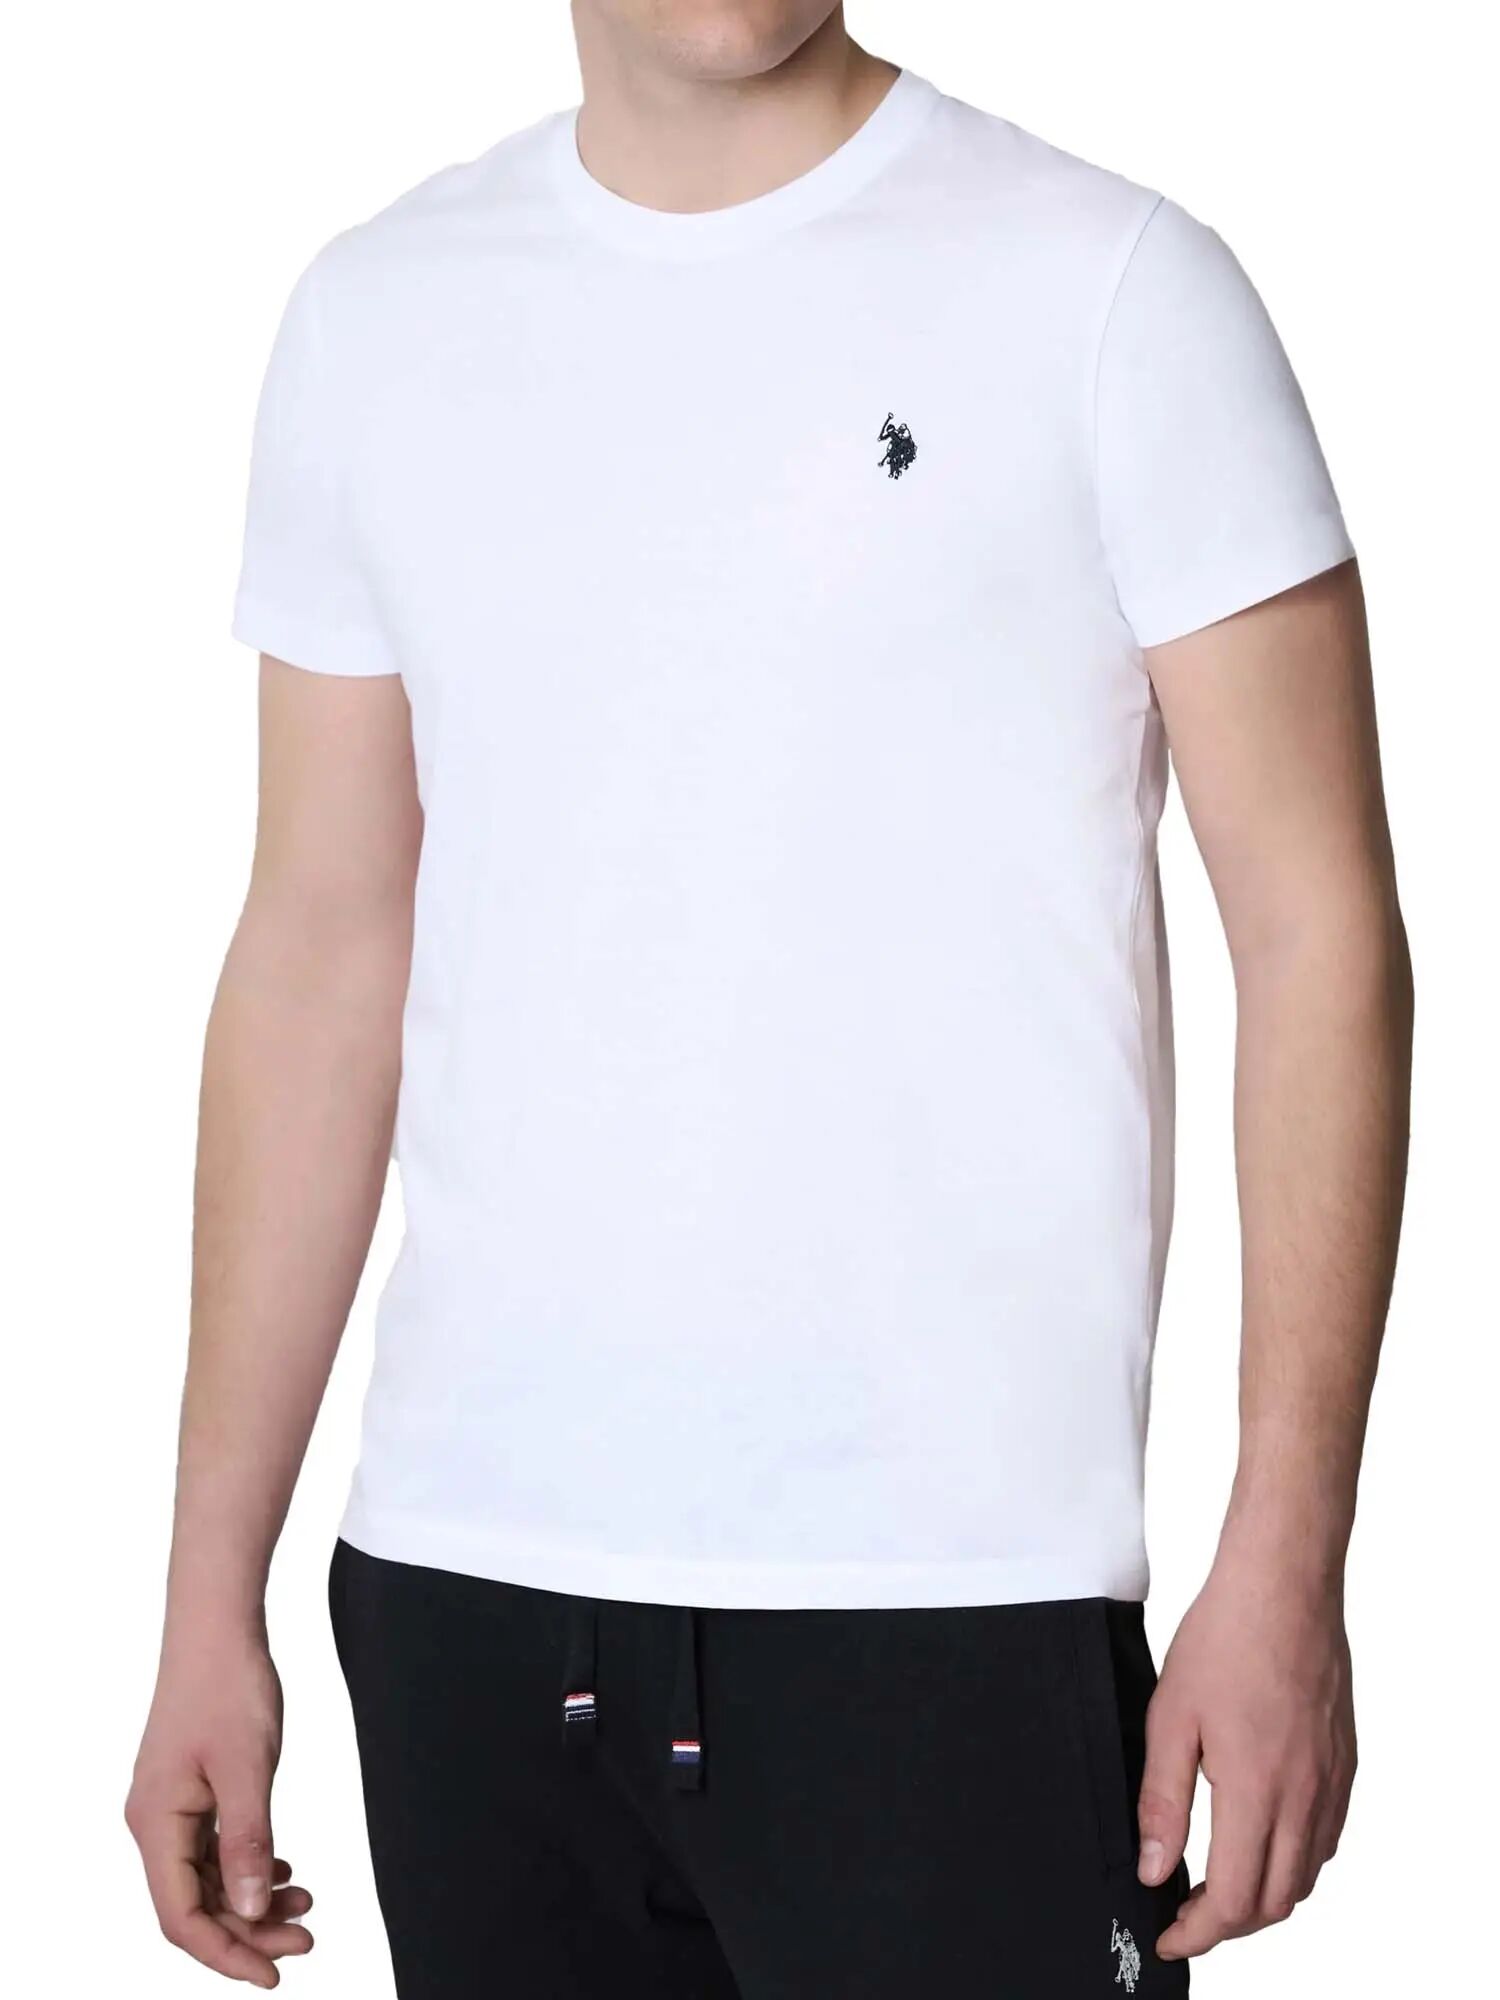 Us Polo Assn. T-shirt Uomo Colore Bianco BIANCO S